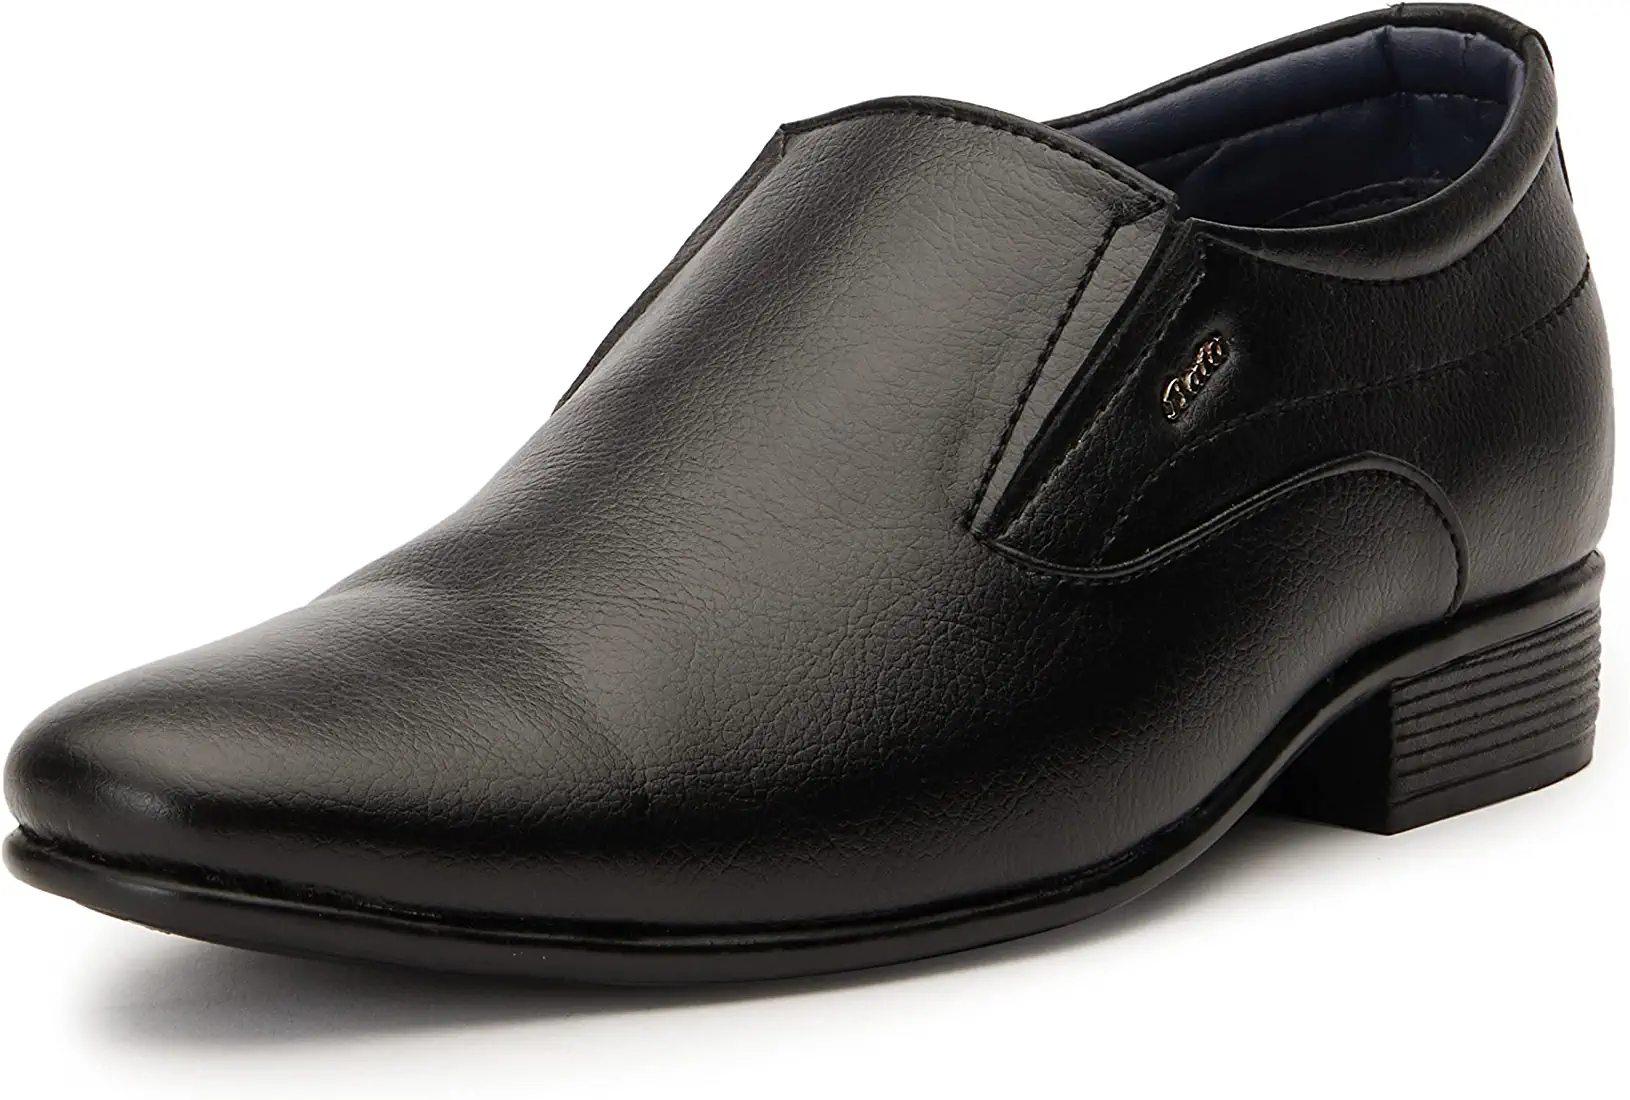 BATA Mens Boss-Slick Formal Shoes, (8516051), Black